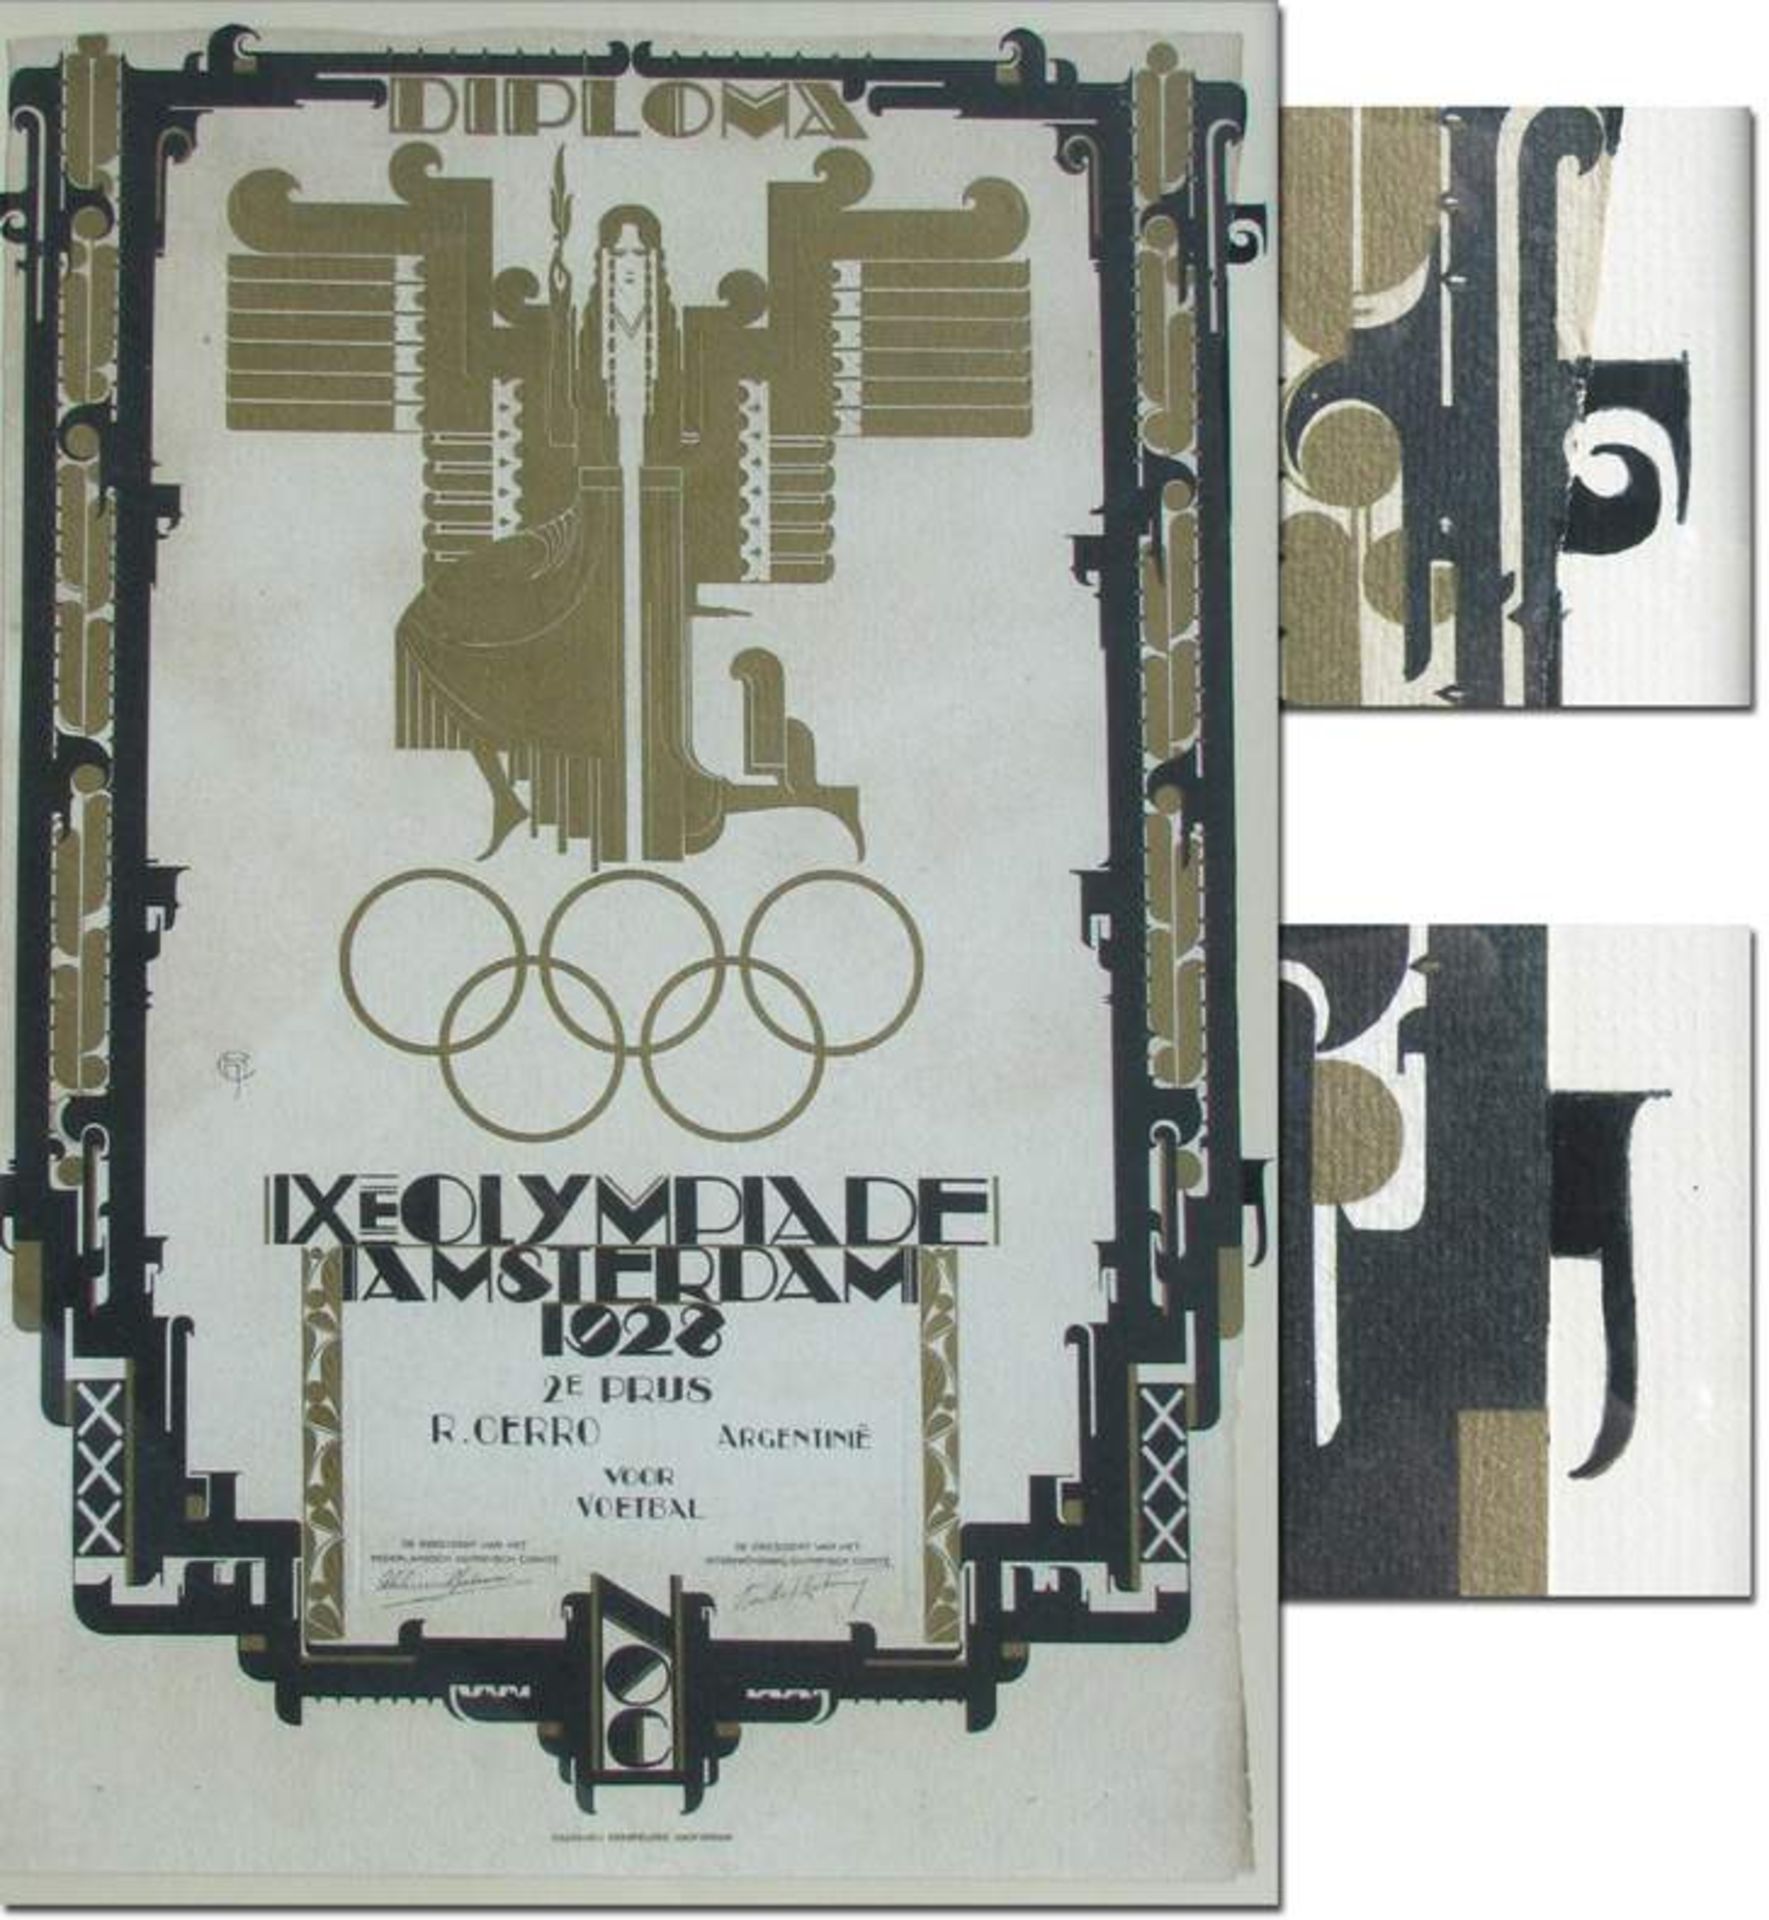 Olympic Games 1928 Silver Medal Winner diploma - Official Olympic Winner diploma for footbal